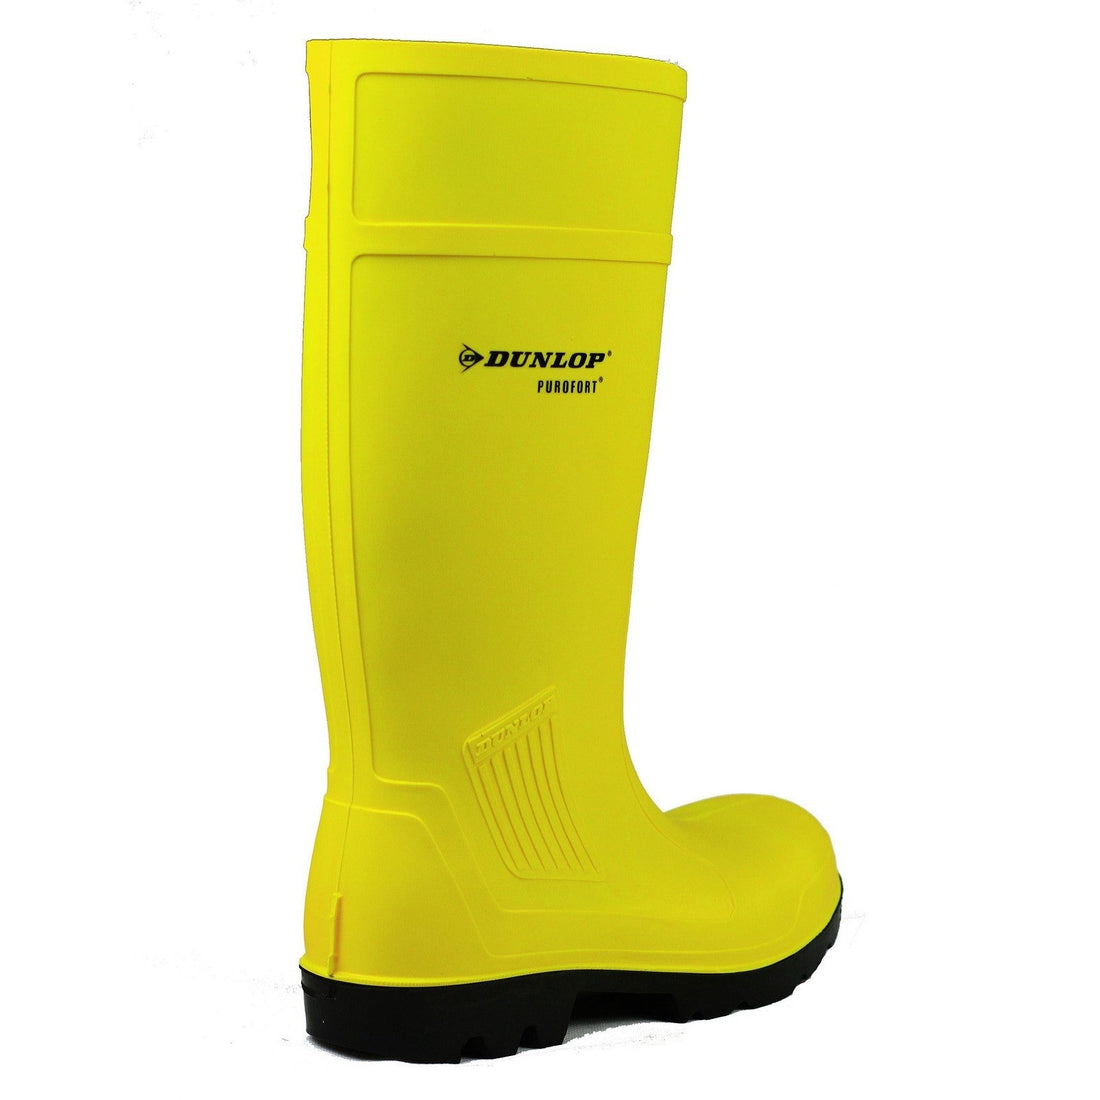 Dunlop Purofort Professional Full Safety Wellington